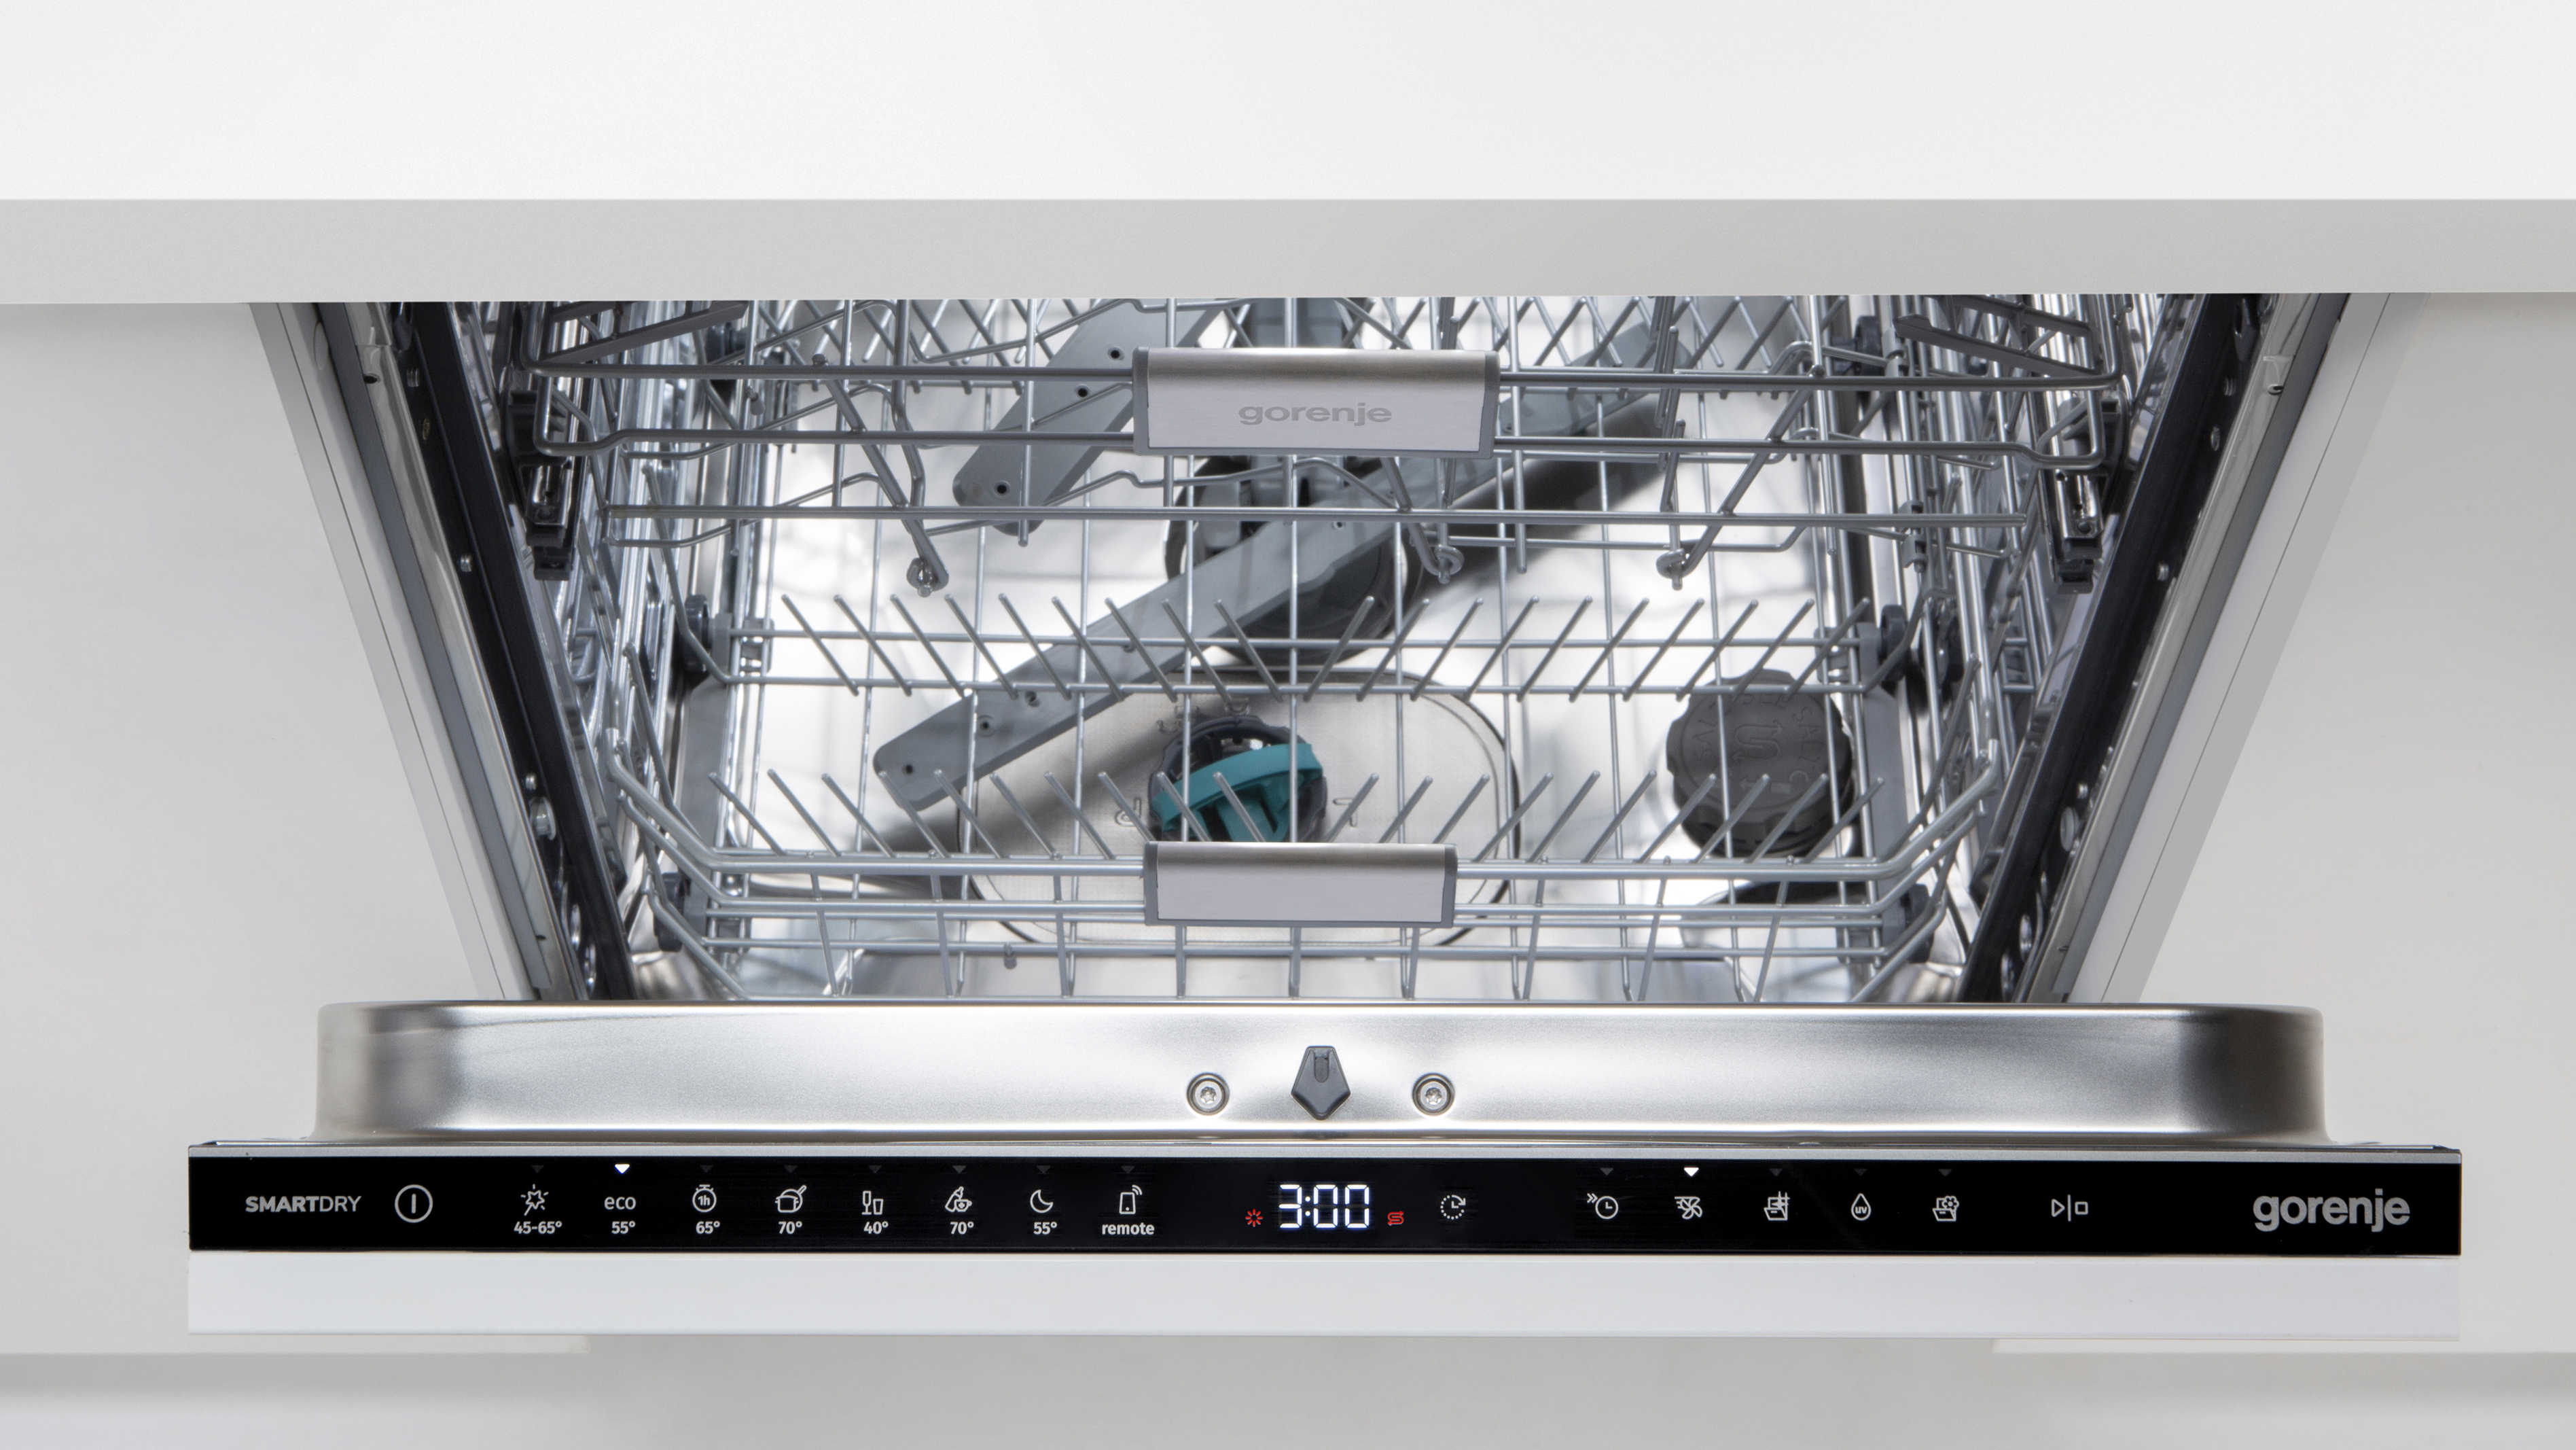 Fully integrated dishwashers Gorenje Series G650